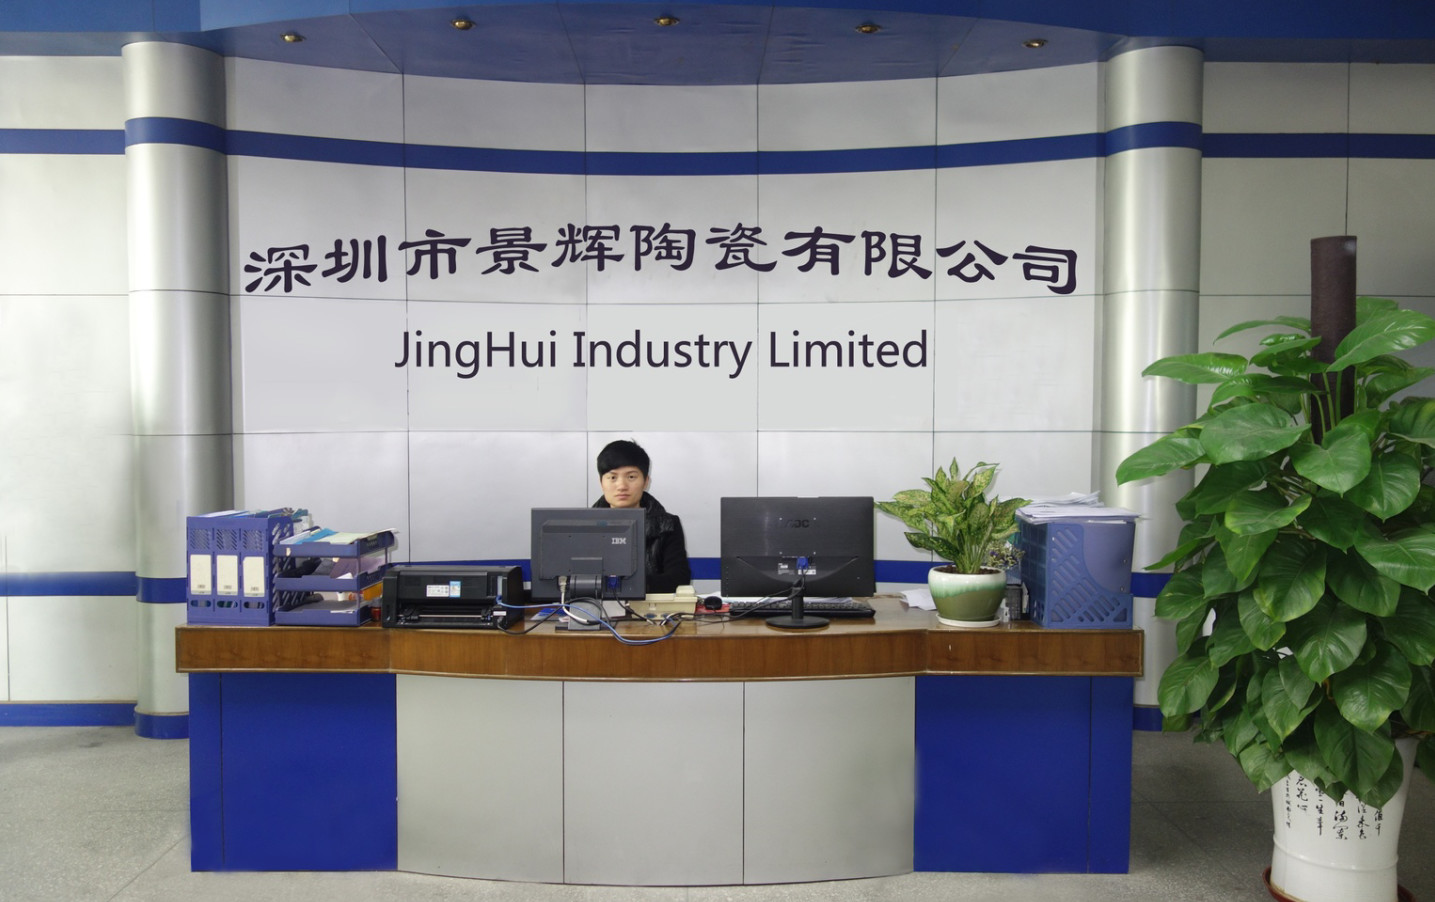 Jinghui Industry Limited